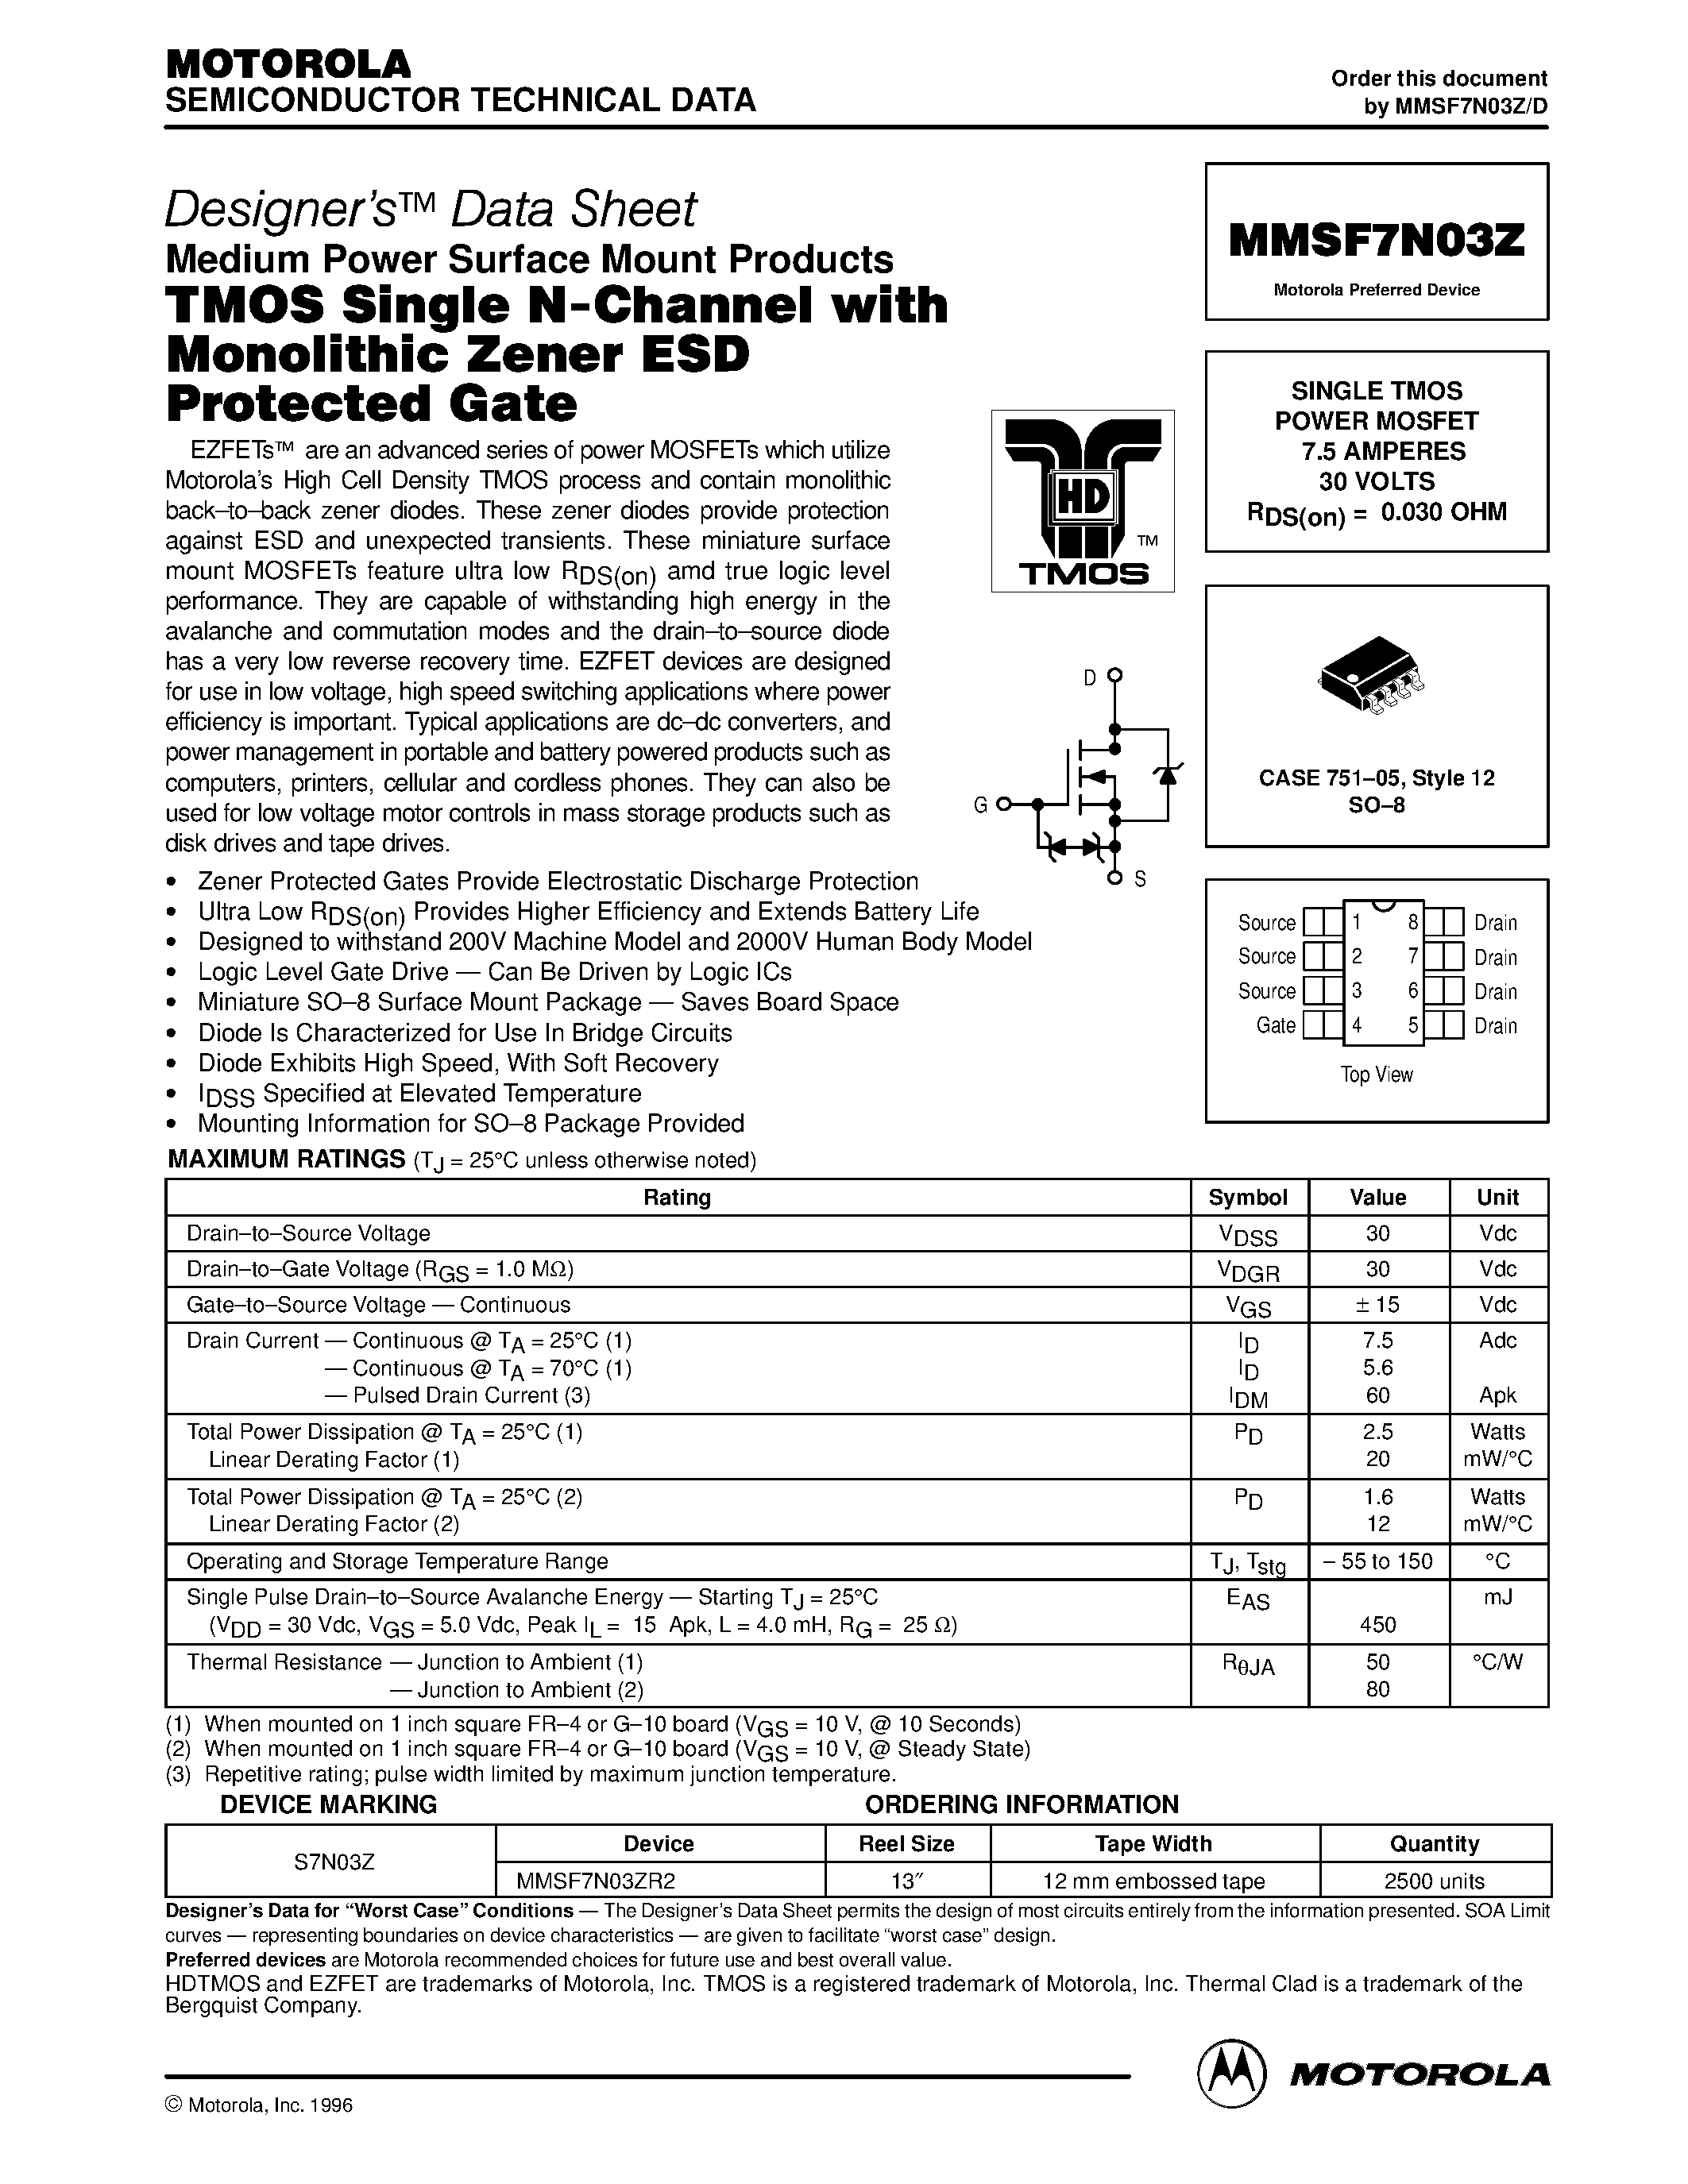 Datasheet MMSF7N03Z - SINGLE TMOS POWER MOSFET 7.5 AMPERES 30 VOLTS page 1